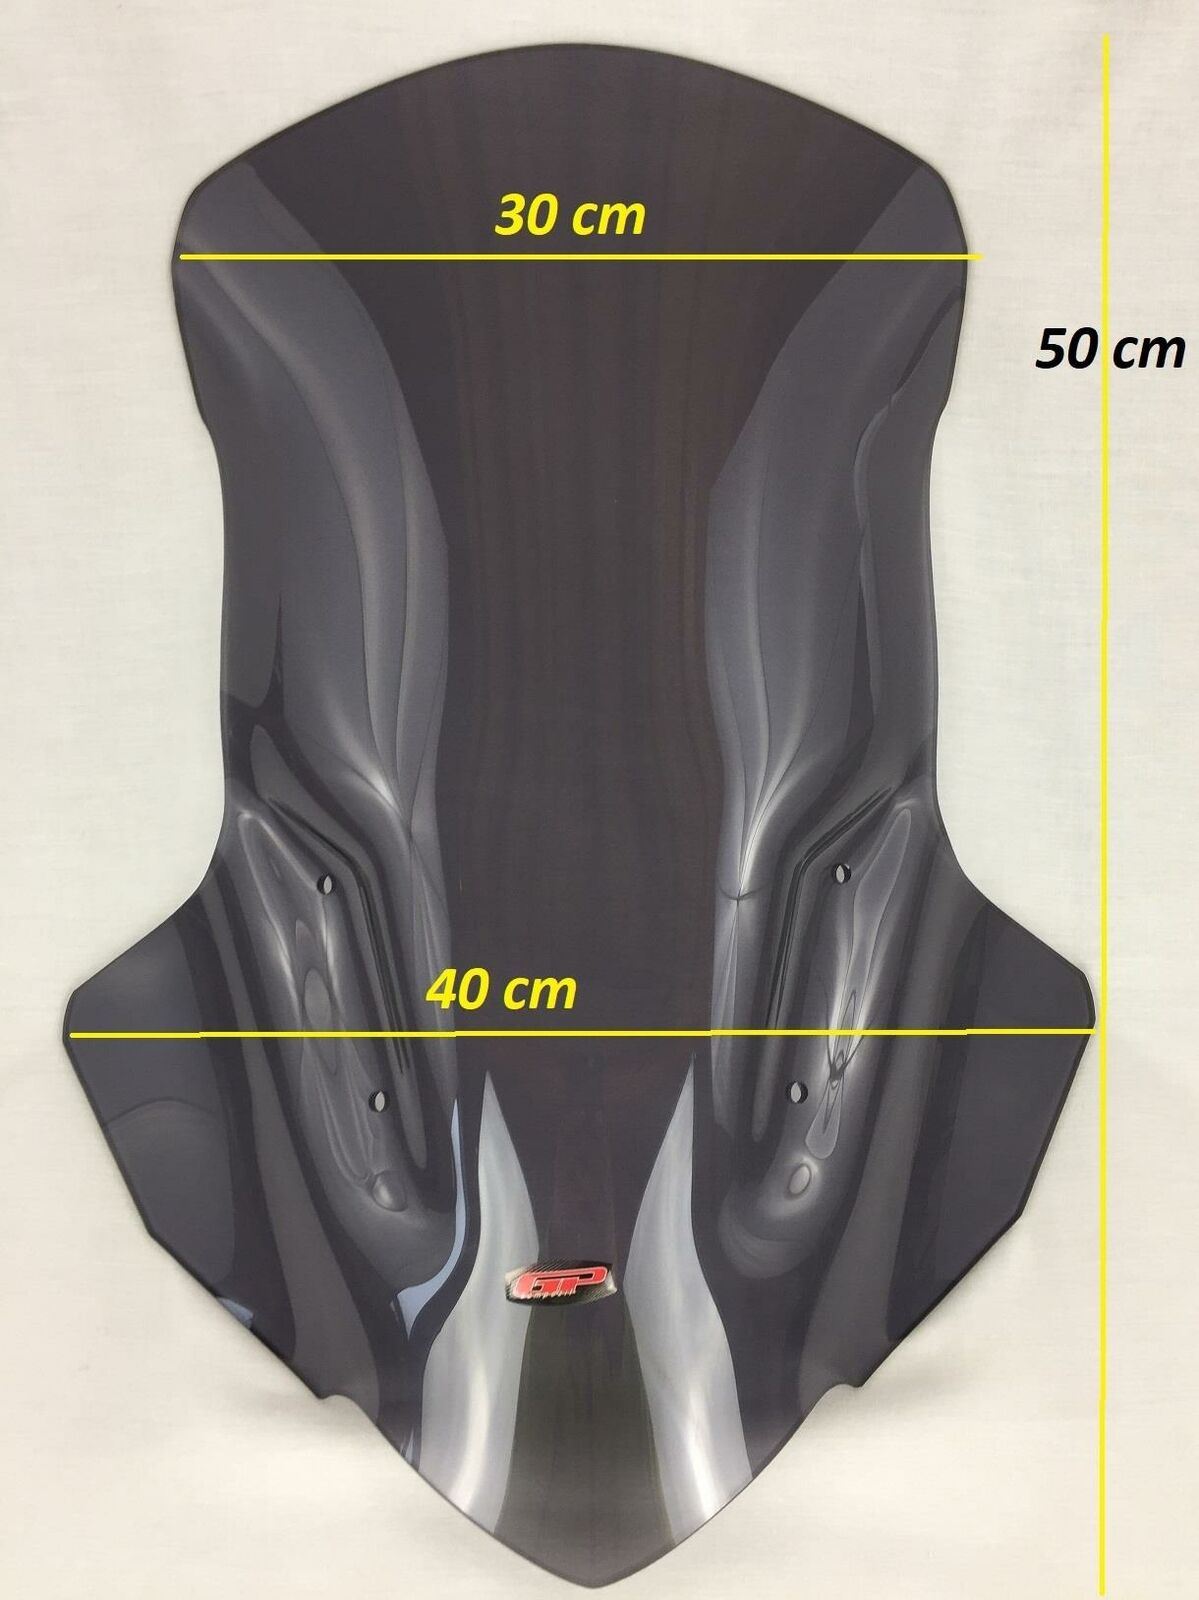 Honda VFR 800X Crossrunner smoke windscreen 2015-20 50 cm